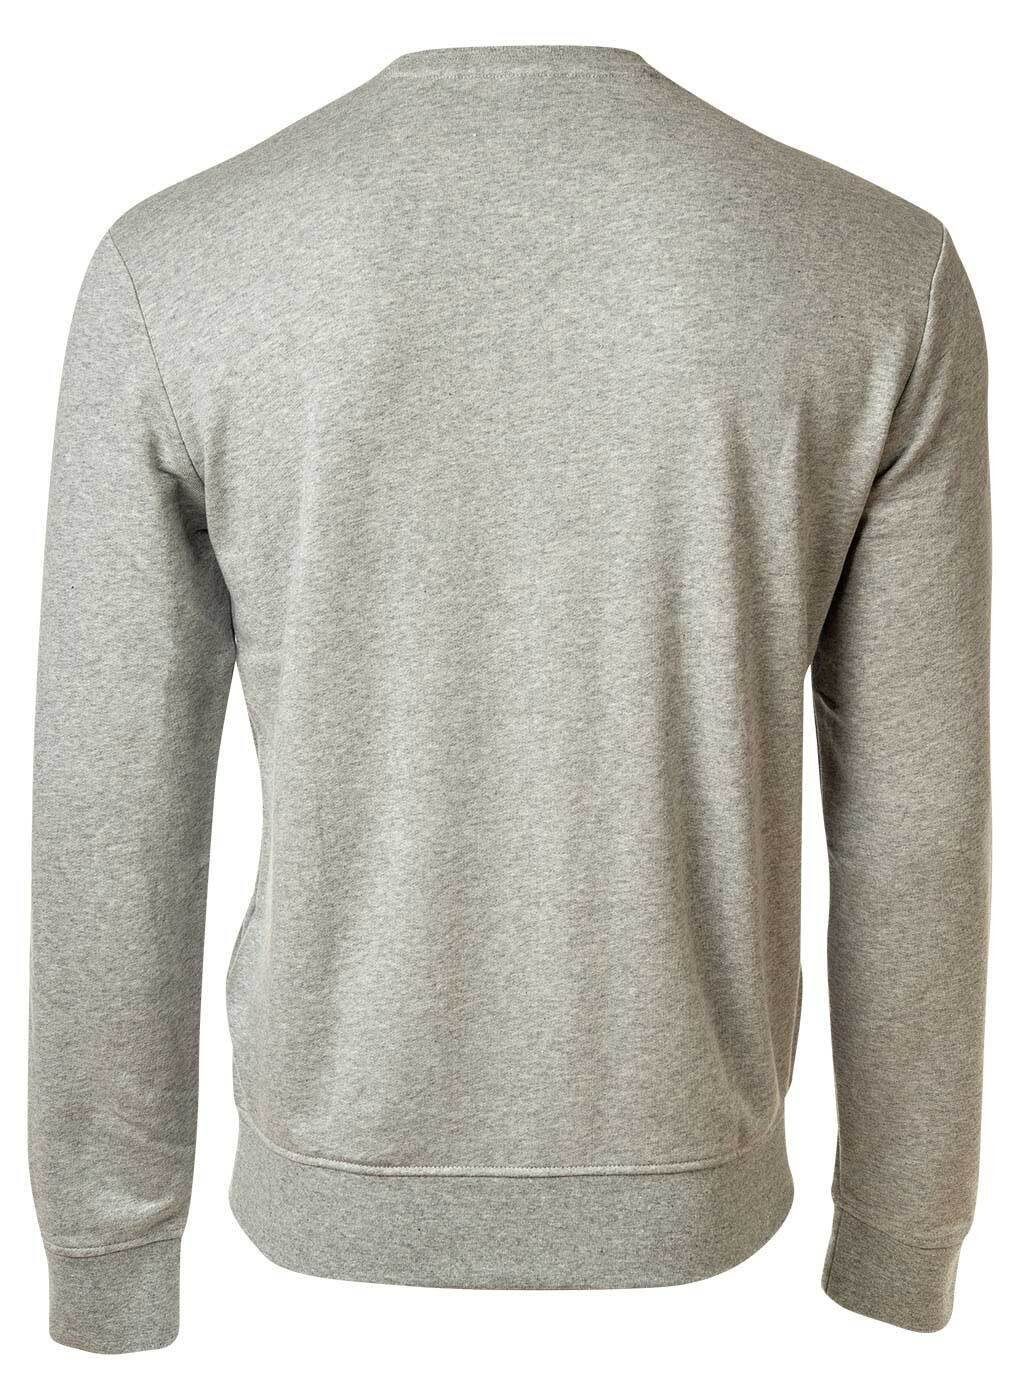 Grau - Sweatshirt Logo Sweatshirt Herren ARMANI Pullover, EXCHANGE